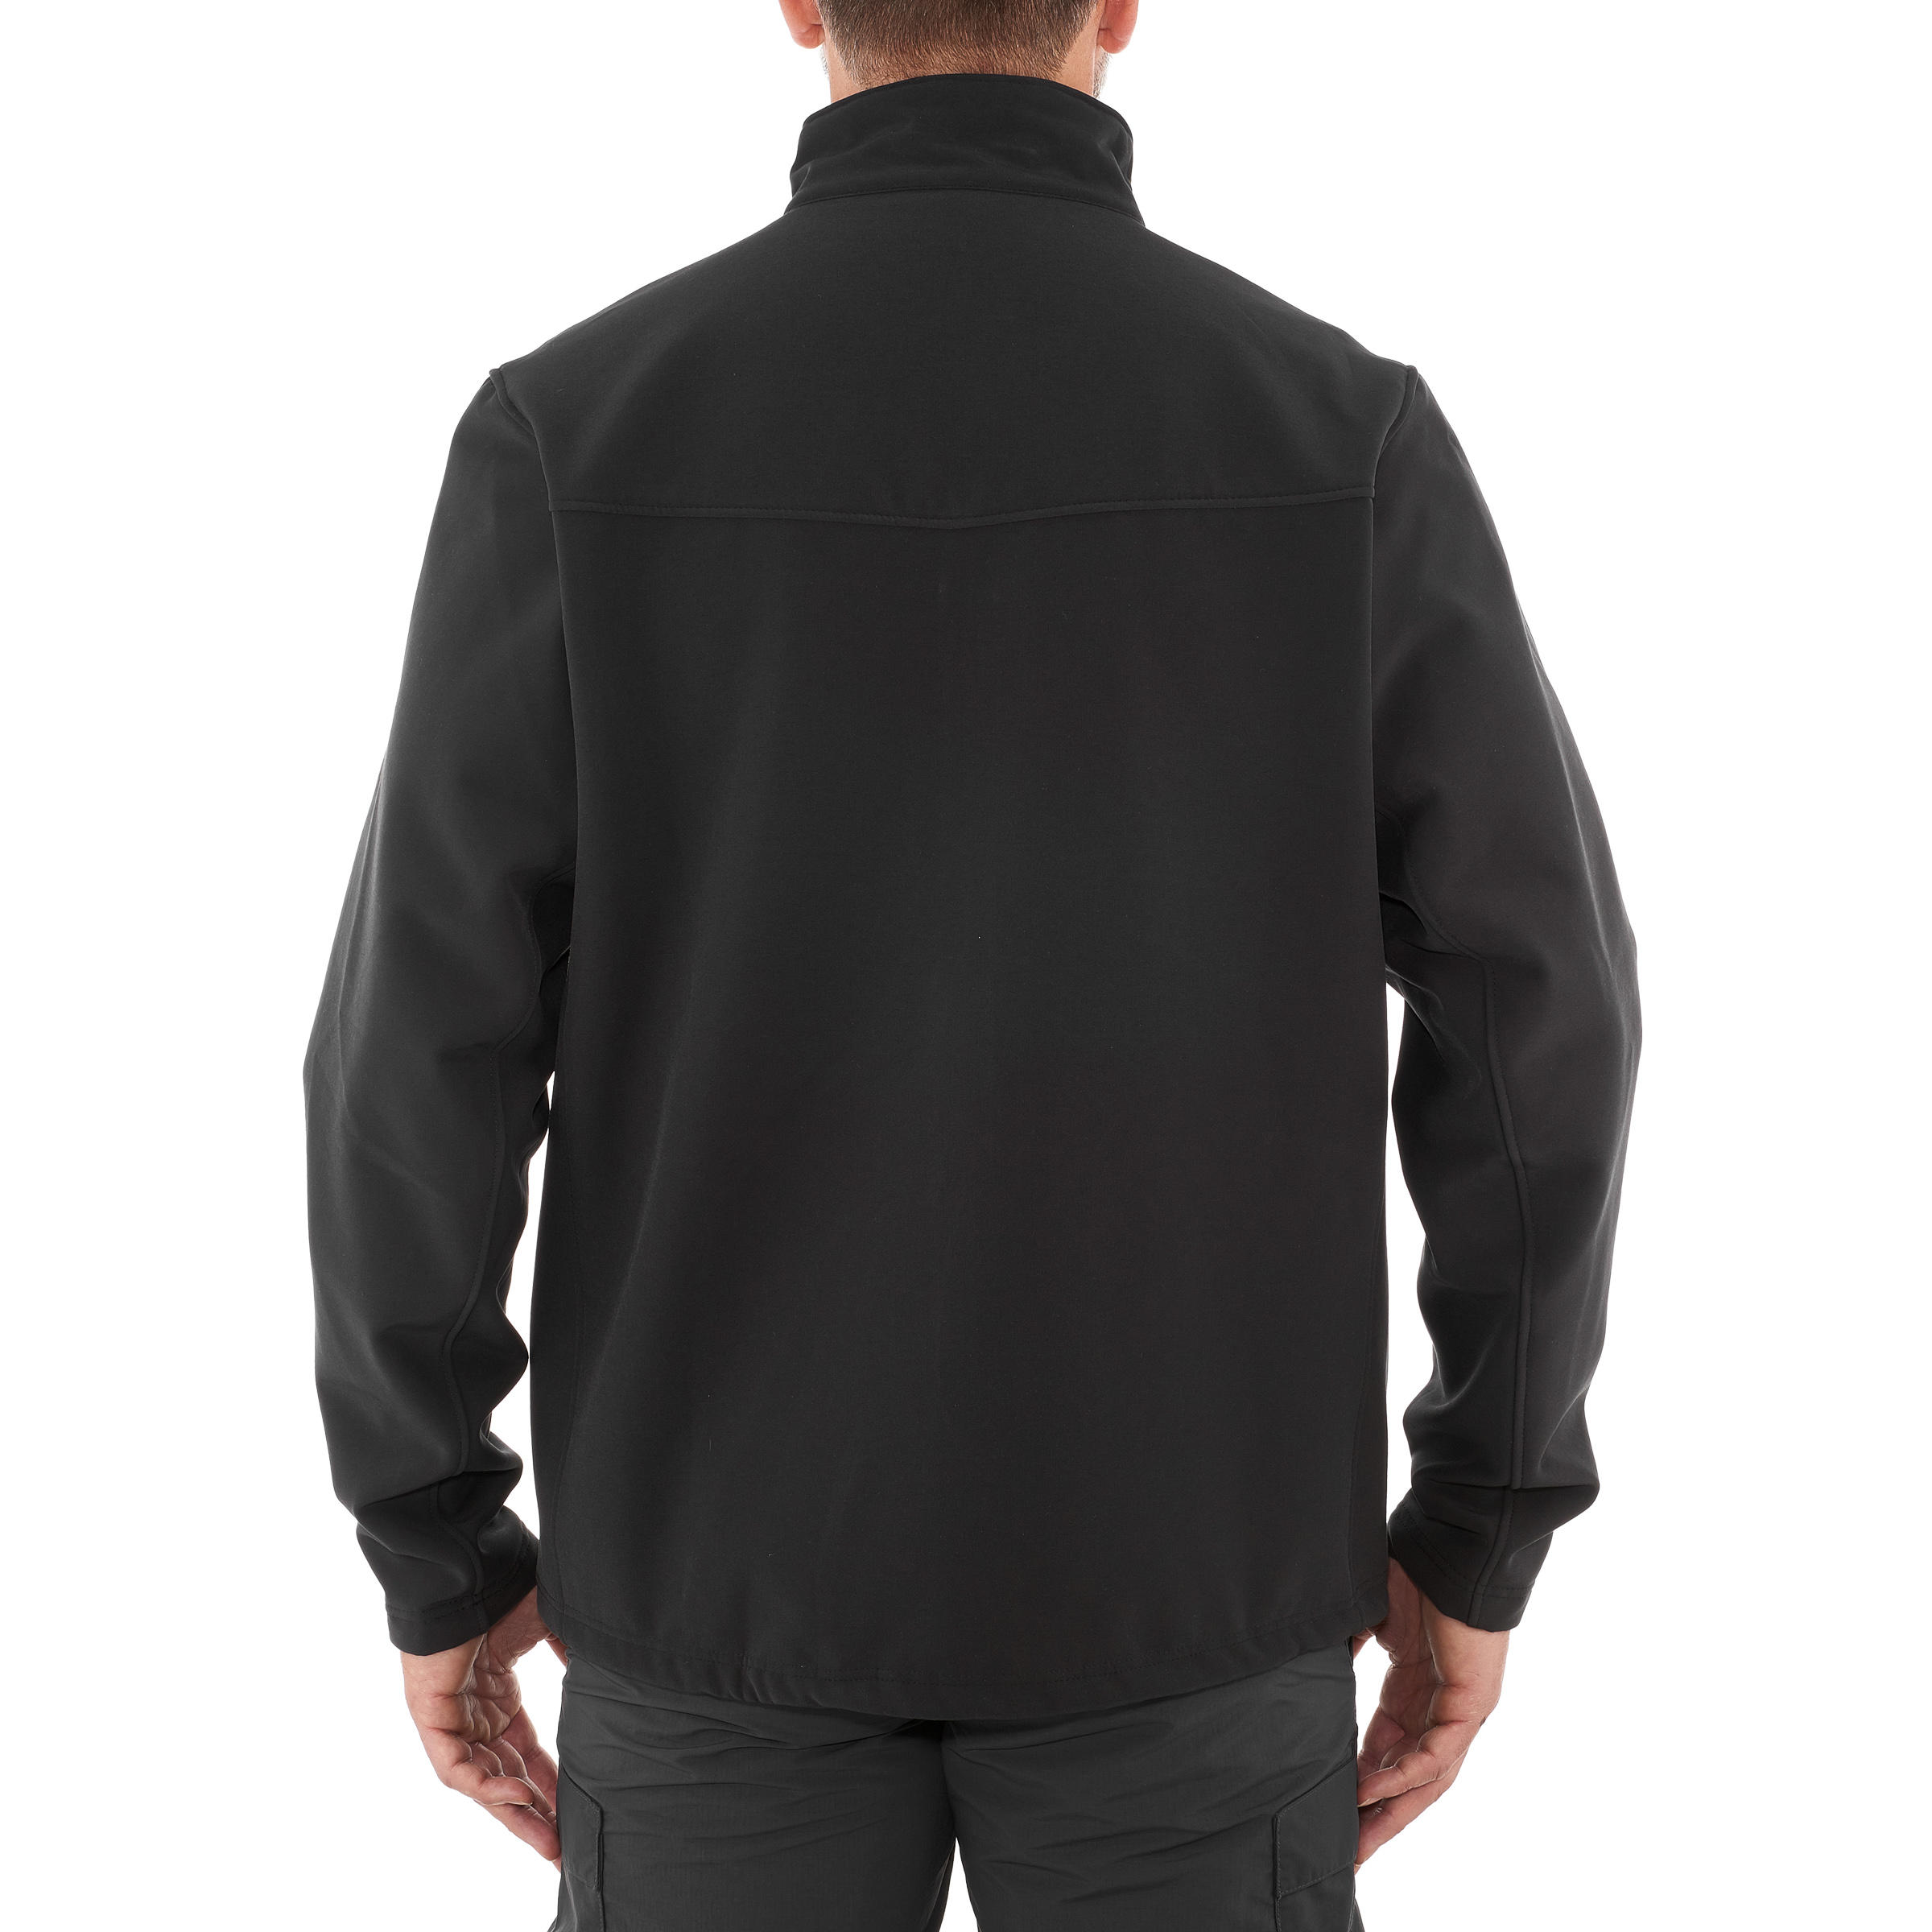 Men's Softshell Windproof Jacket - Black 4/7